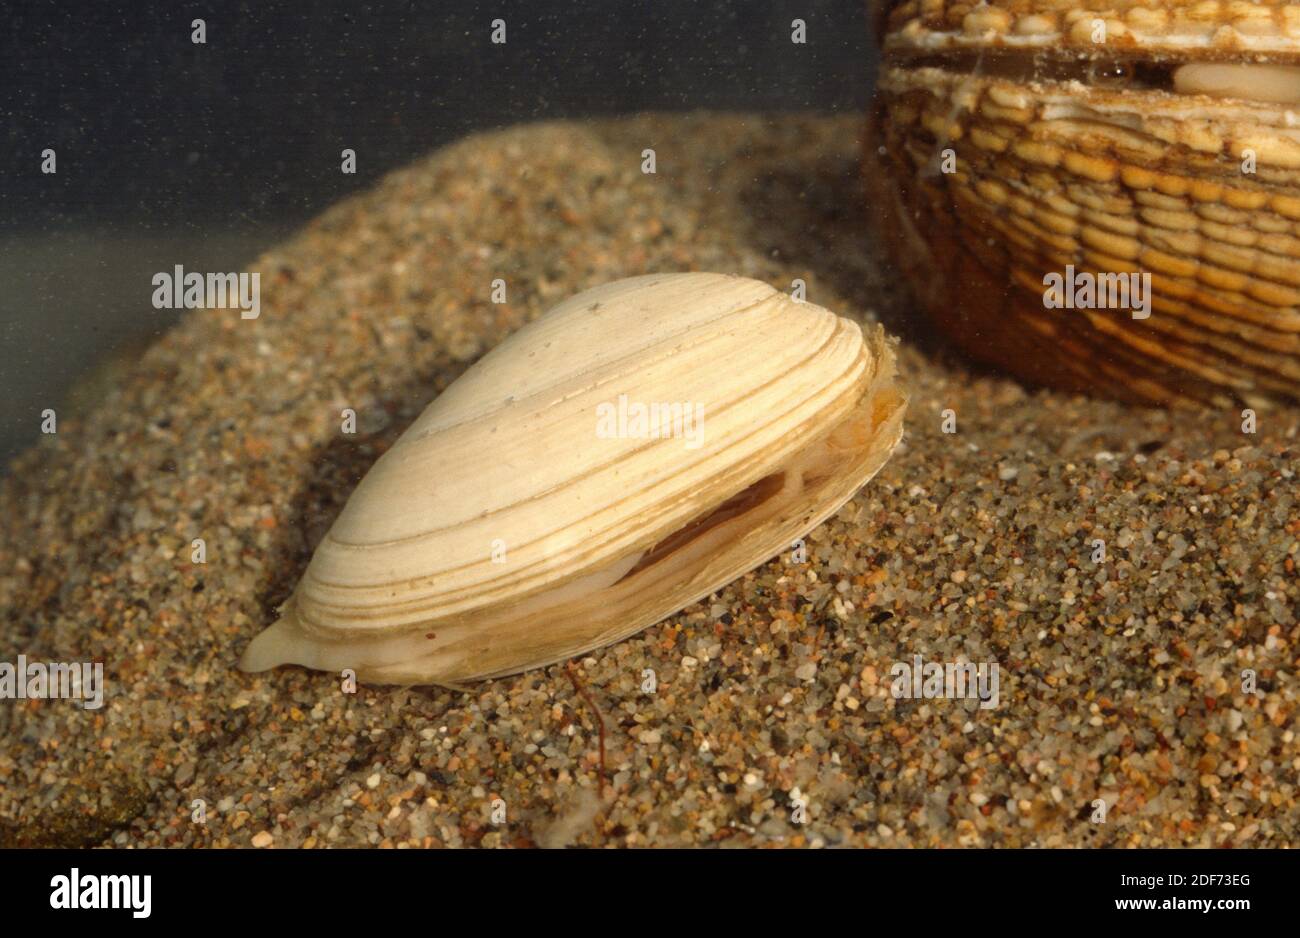 Softshell or steamer (Mya arenaria) is an edible bivalve mollusk. Stock Photo